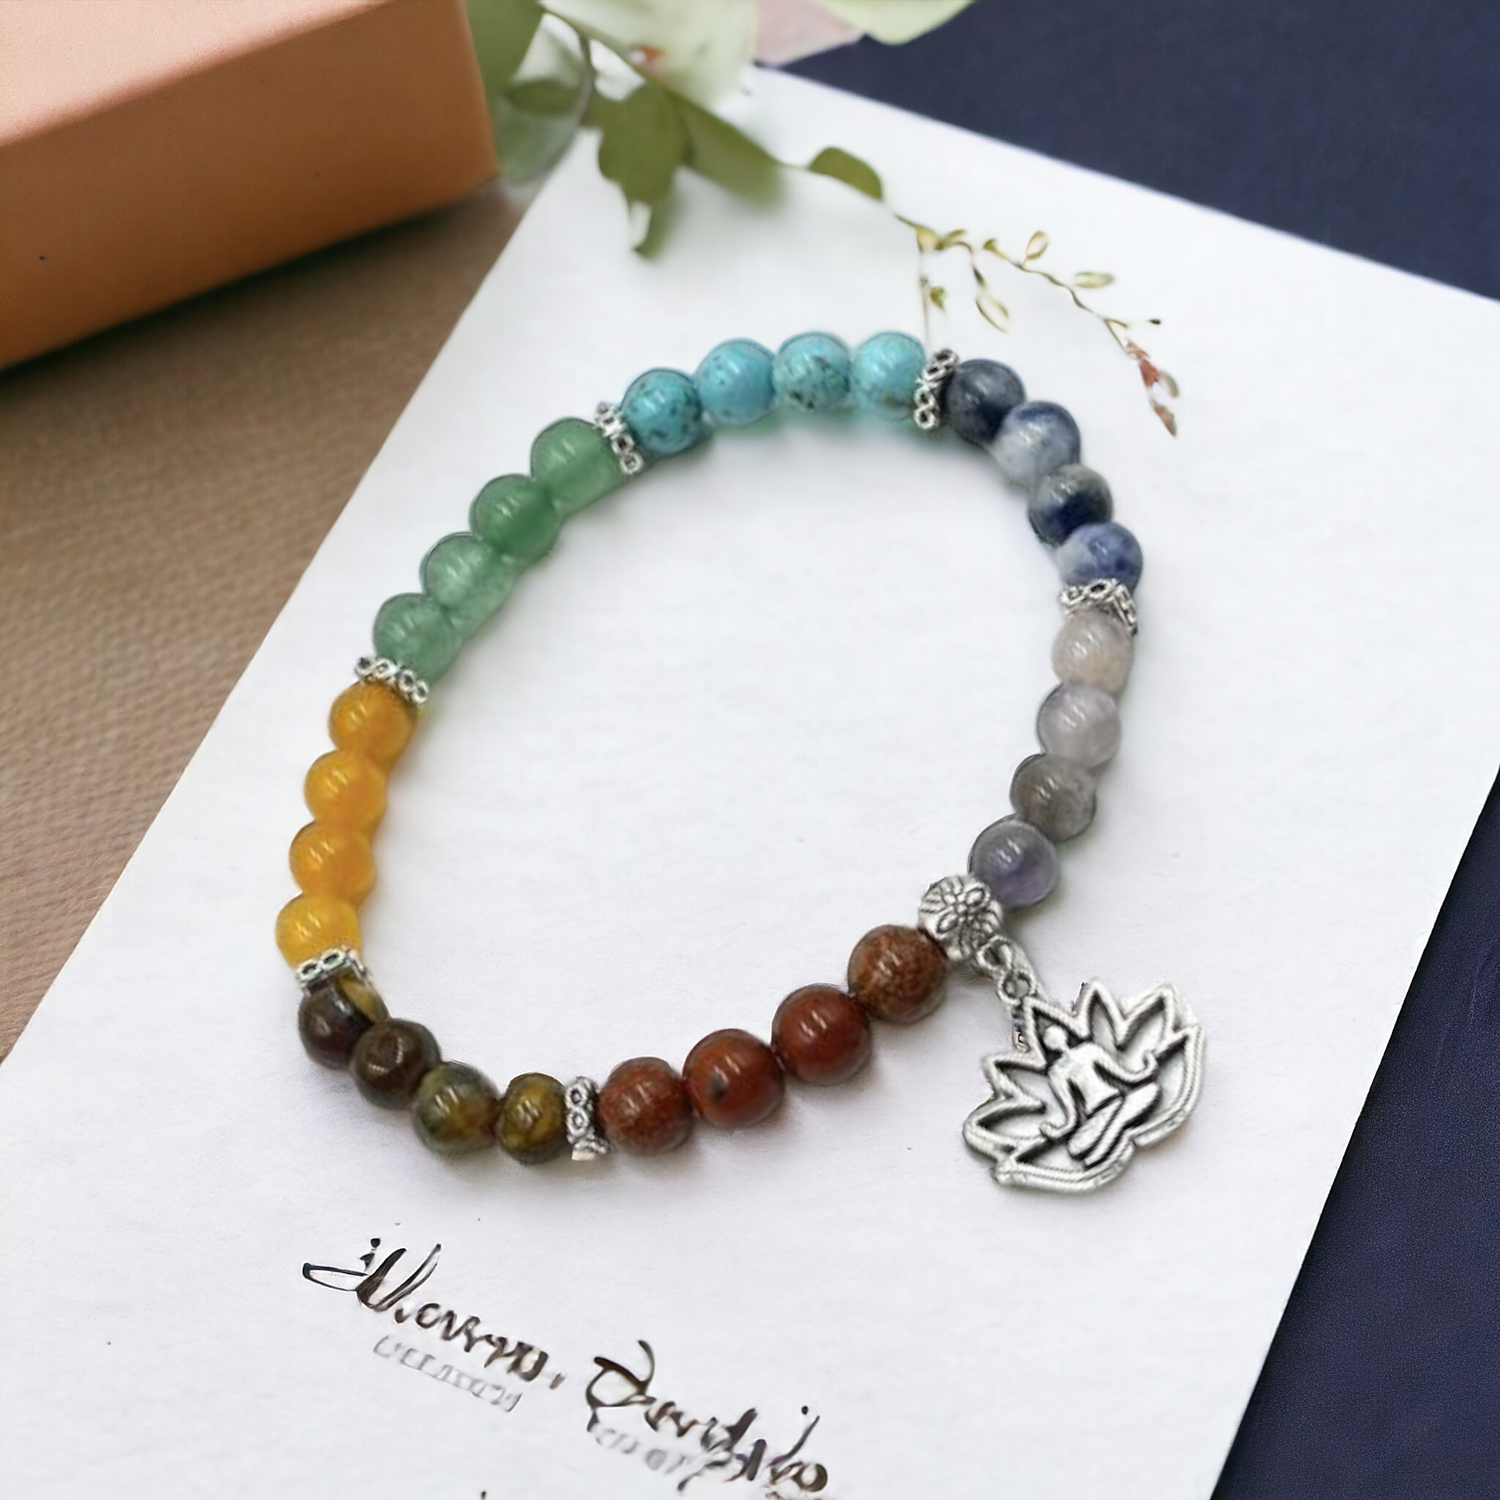 Chakra Stone Bracelet with Meditation Charm- includes Chakra Tumbled Stones